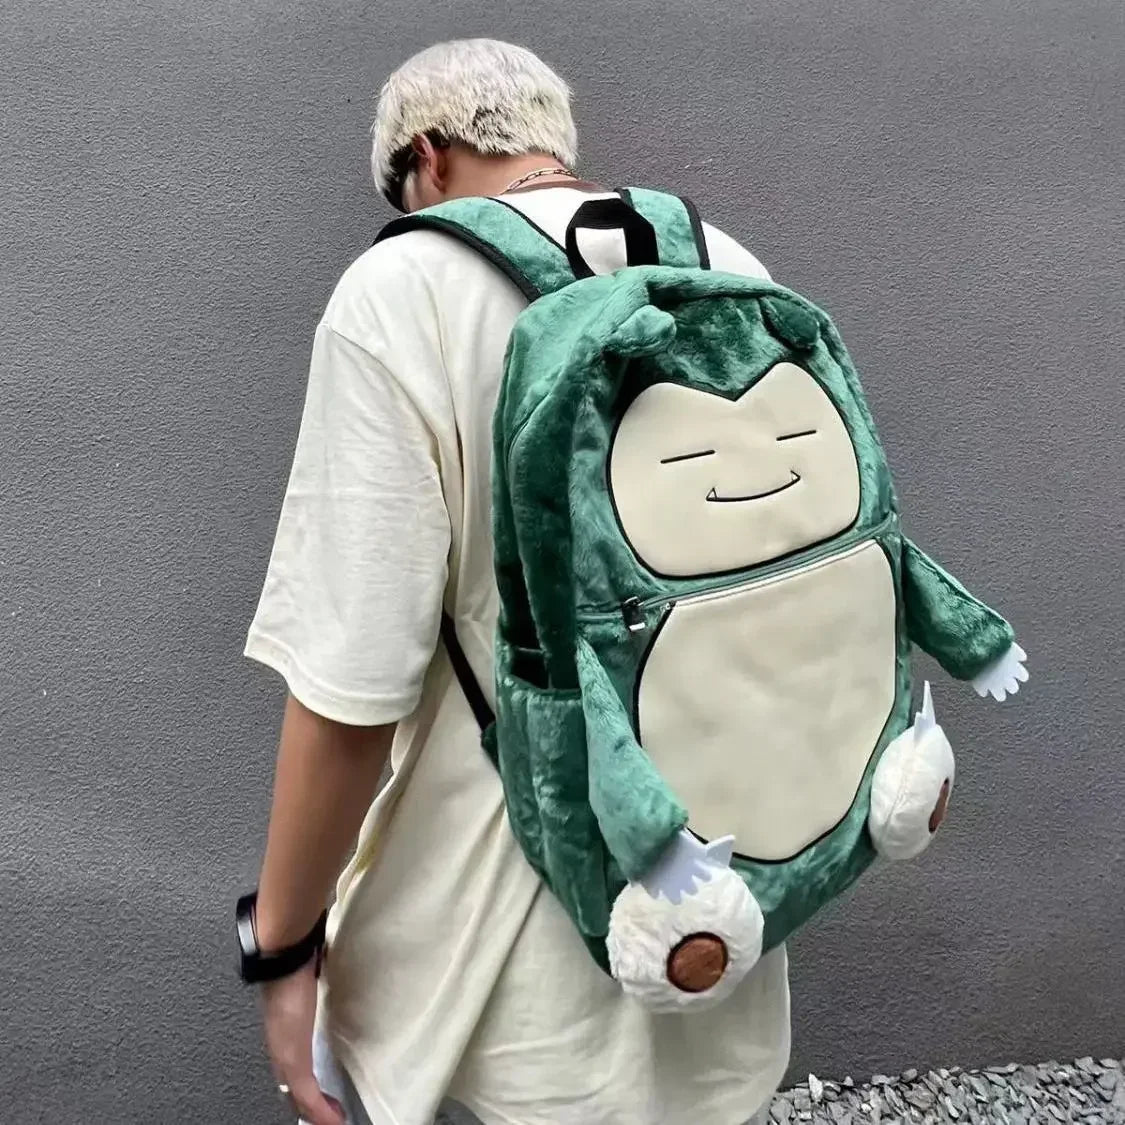 Pokemon Plush Backpack Schoolbag 1